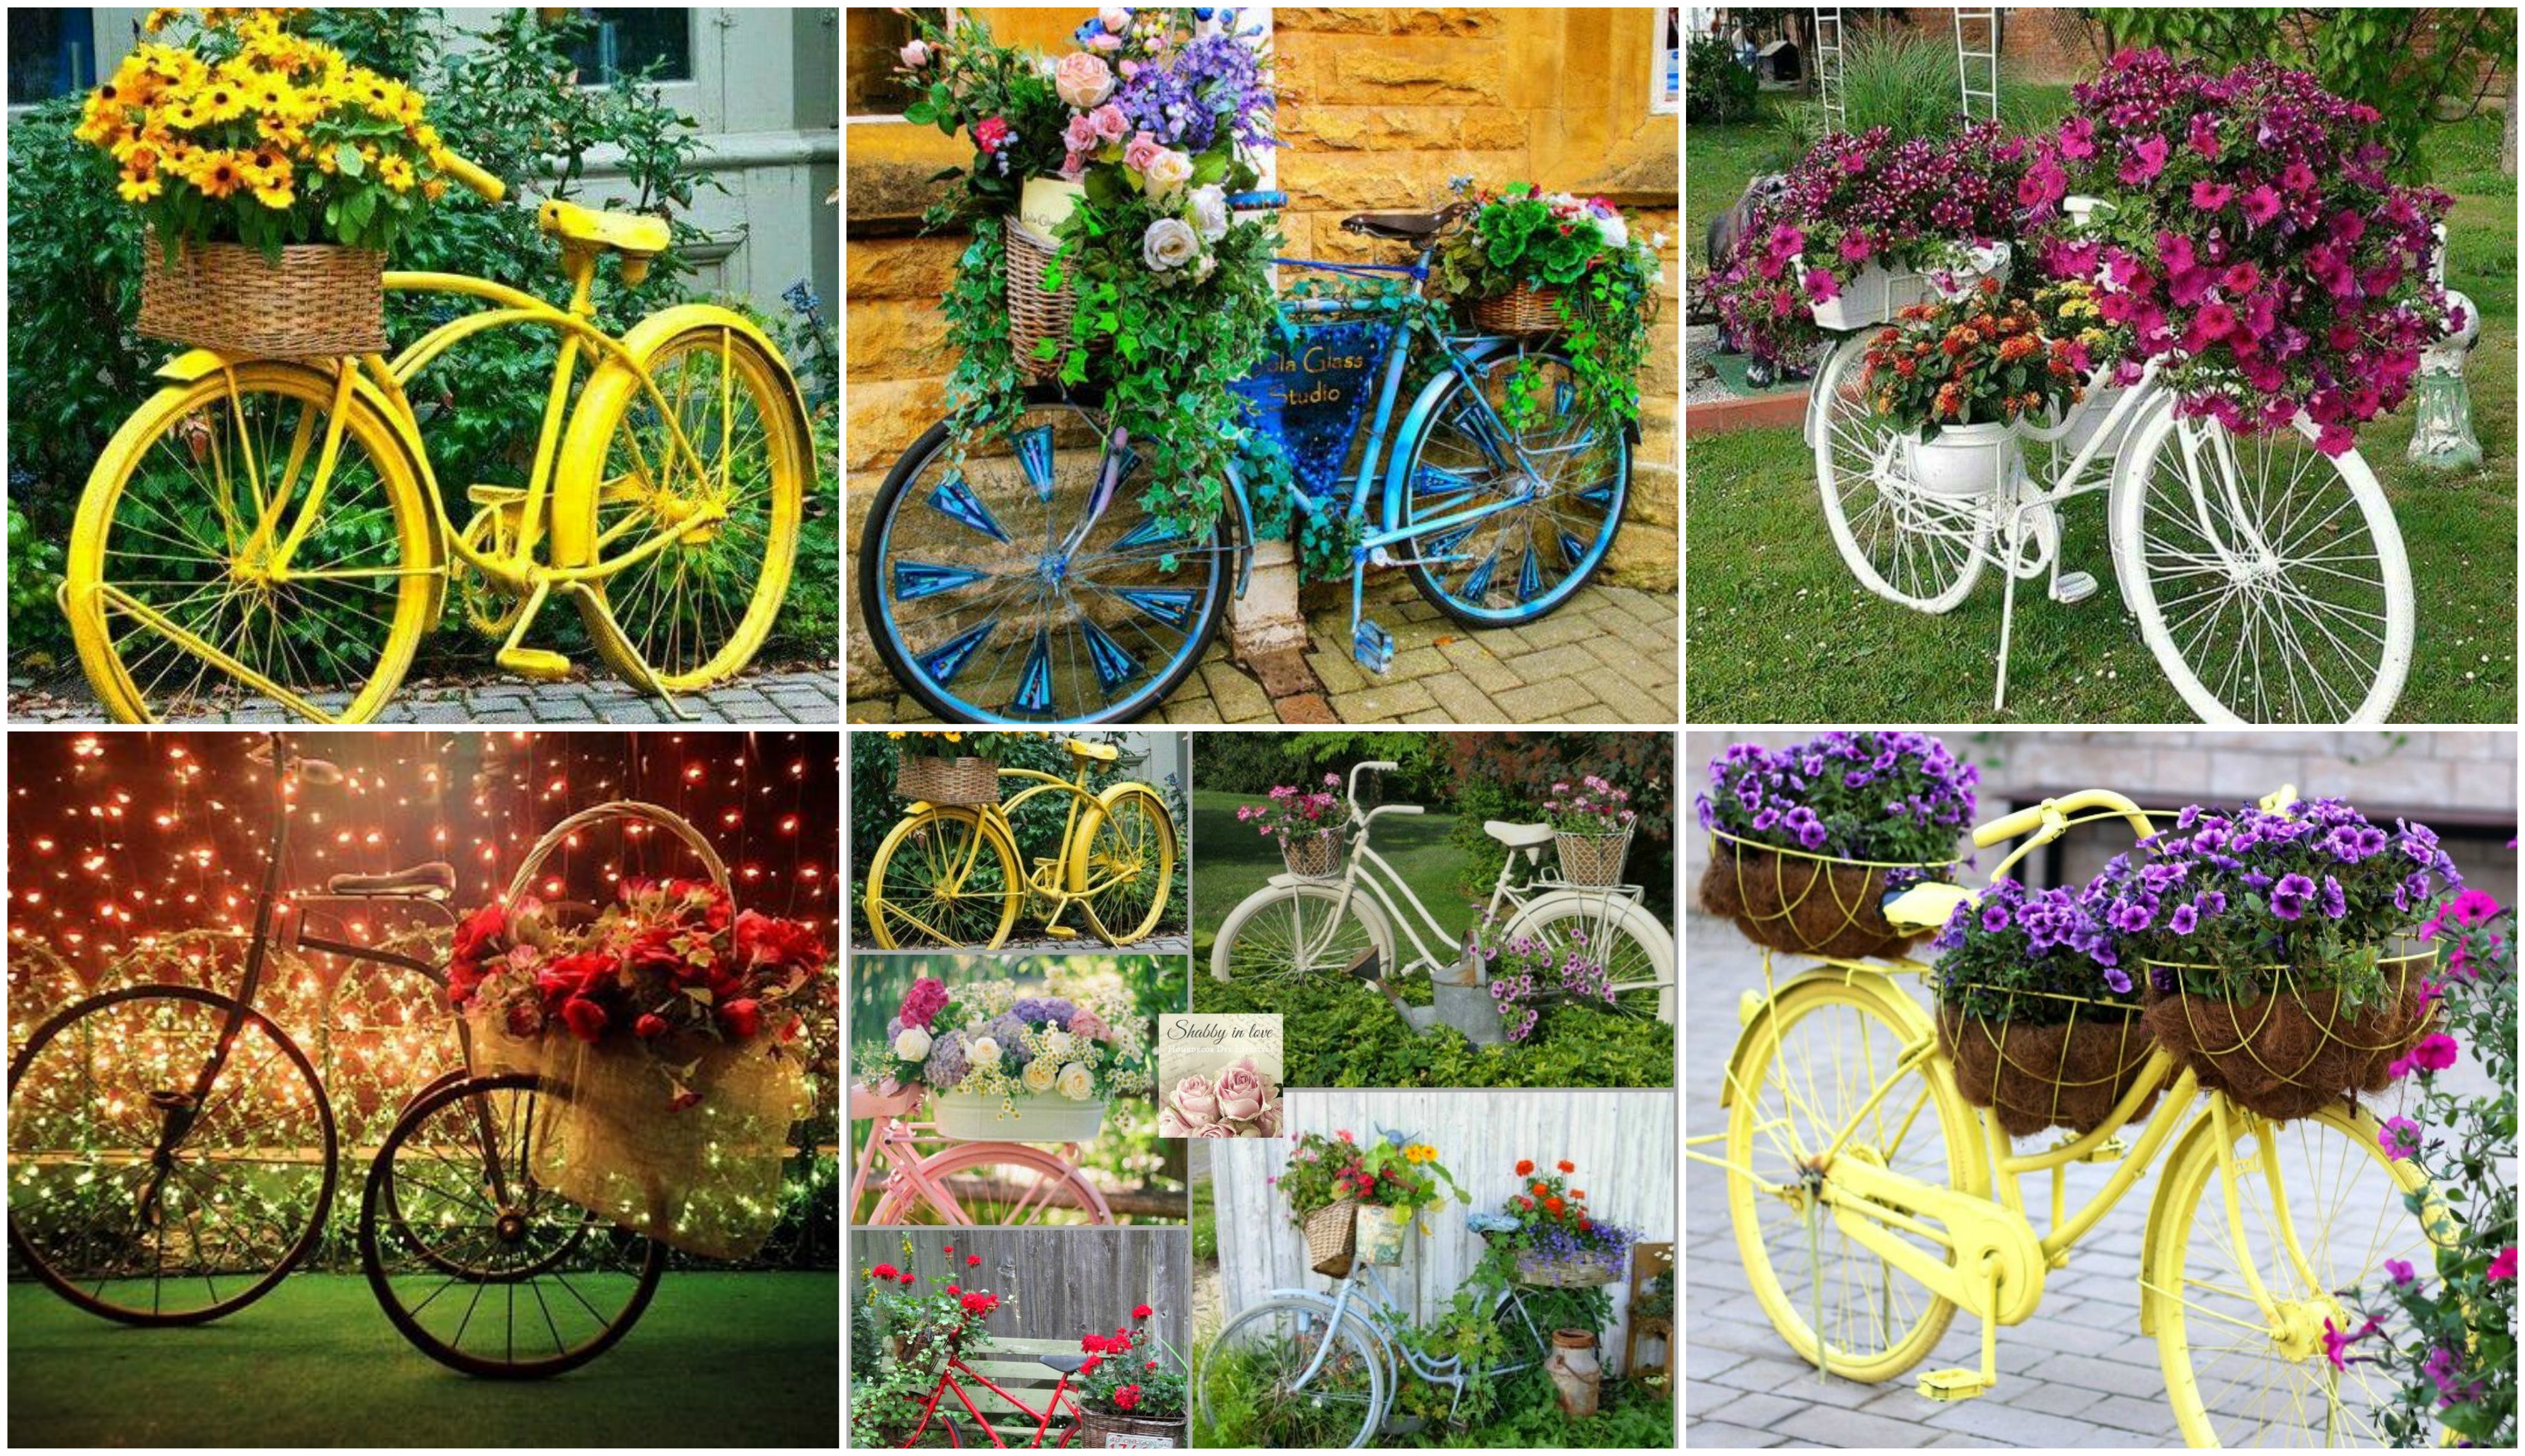 Kreative Gartenideen – Deko aus altem Fahrrad ...